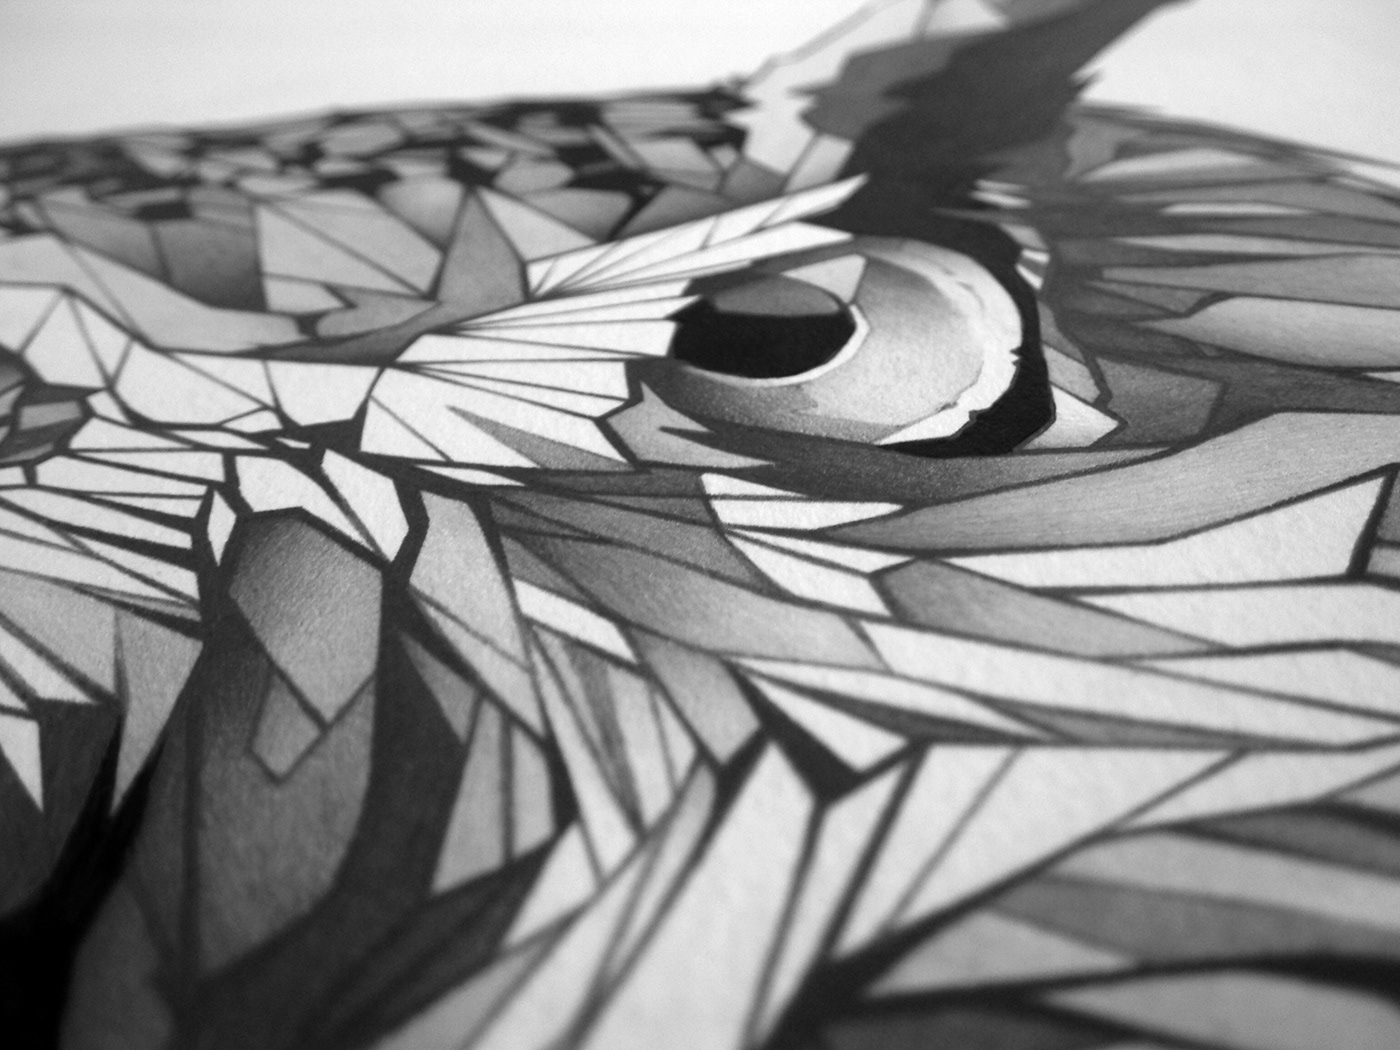 graphite mechanical pencil ink inking owl digital color pink animal eyes print poster hurricanefestival Music Festival hurricane